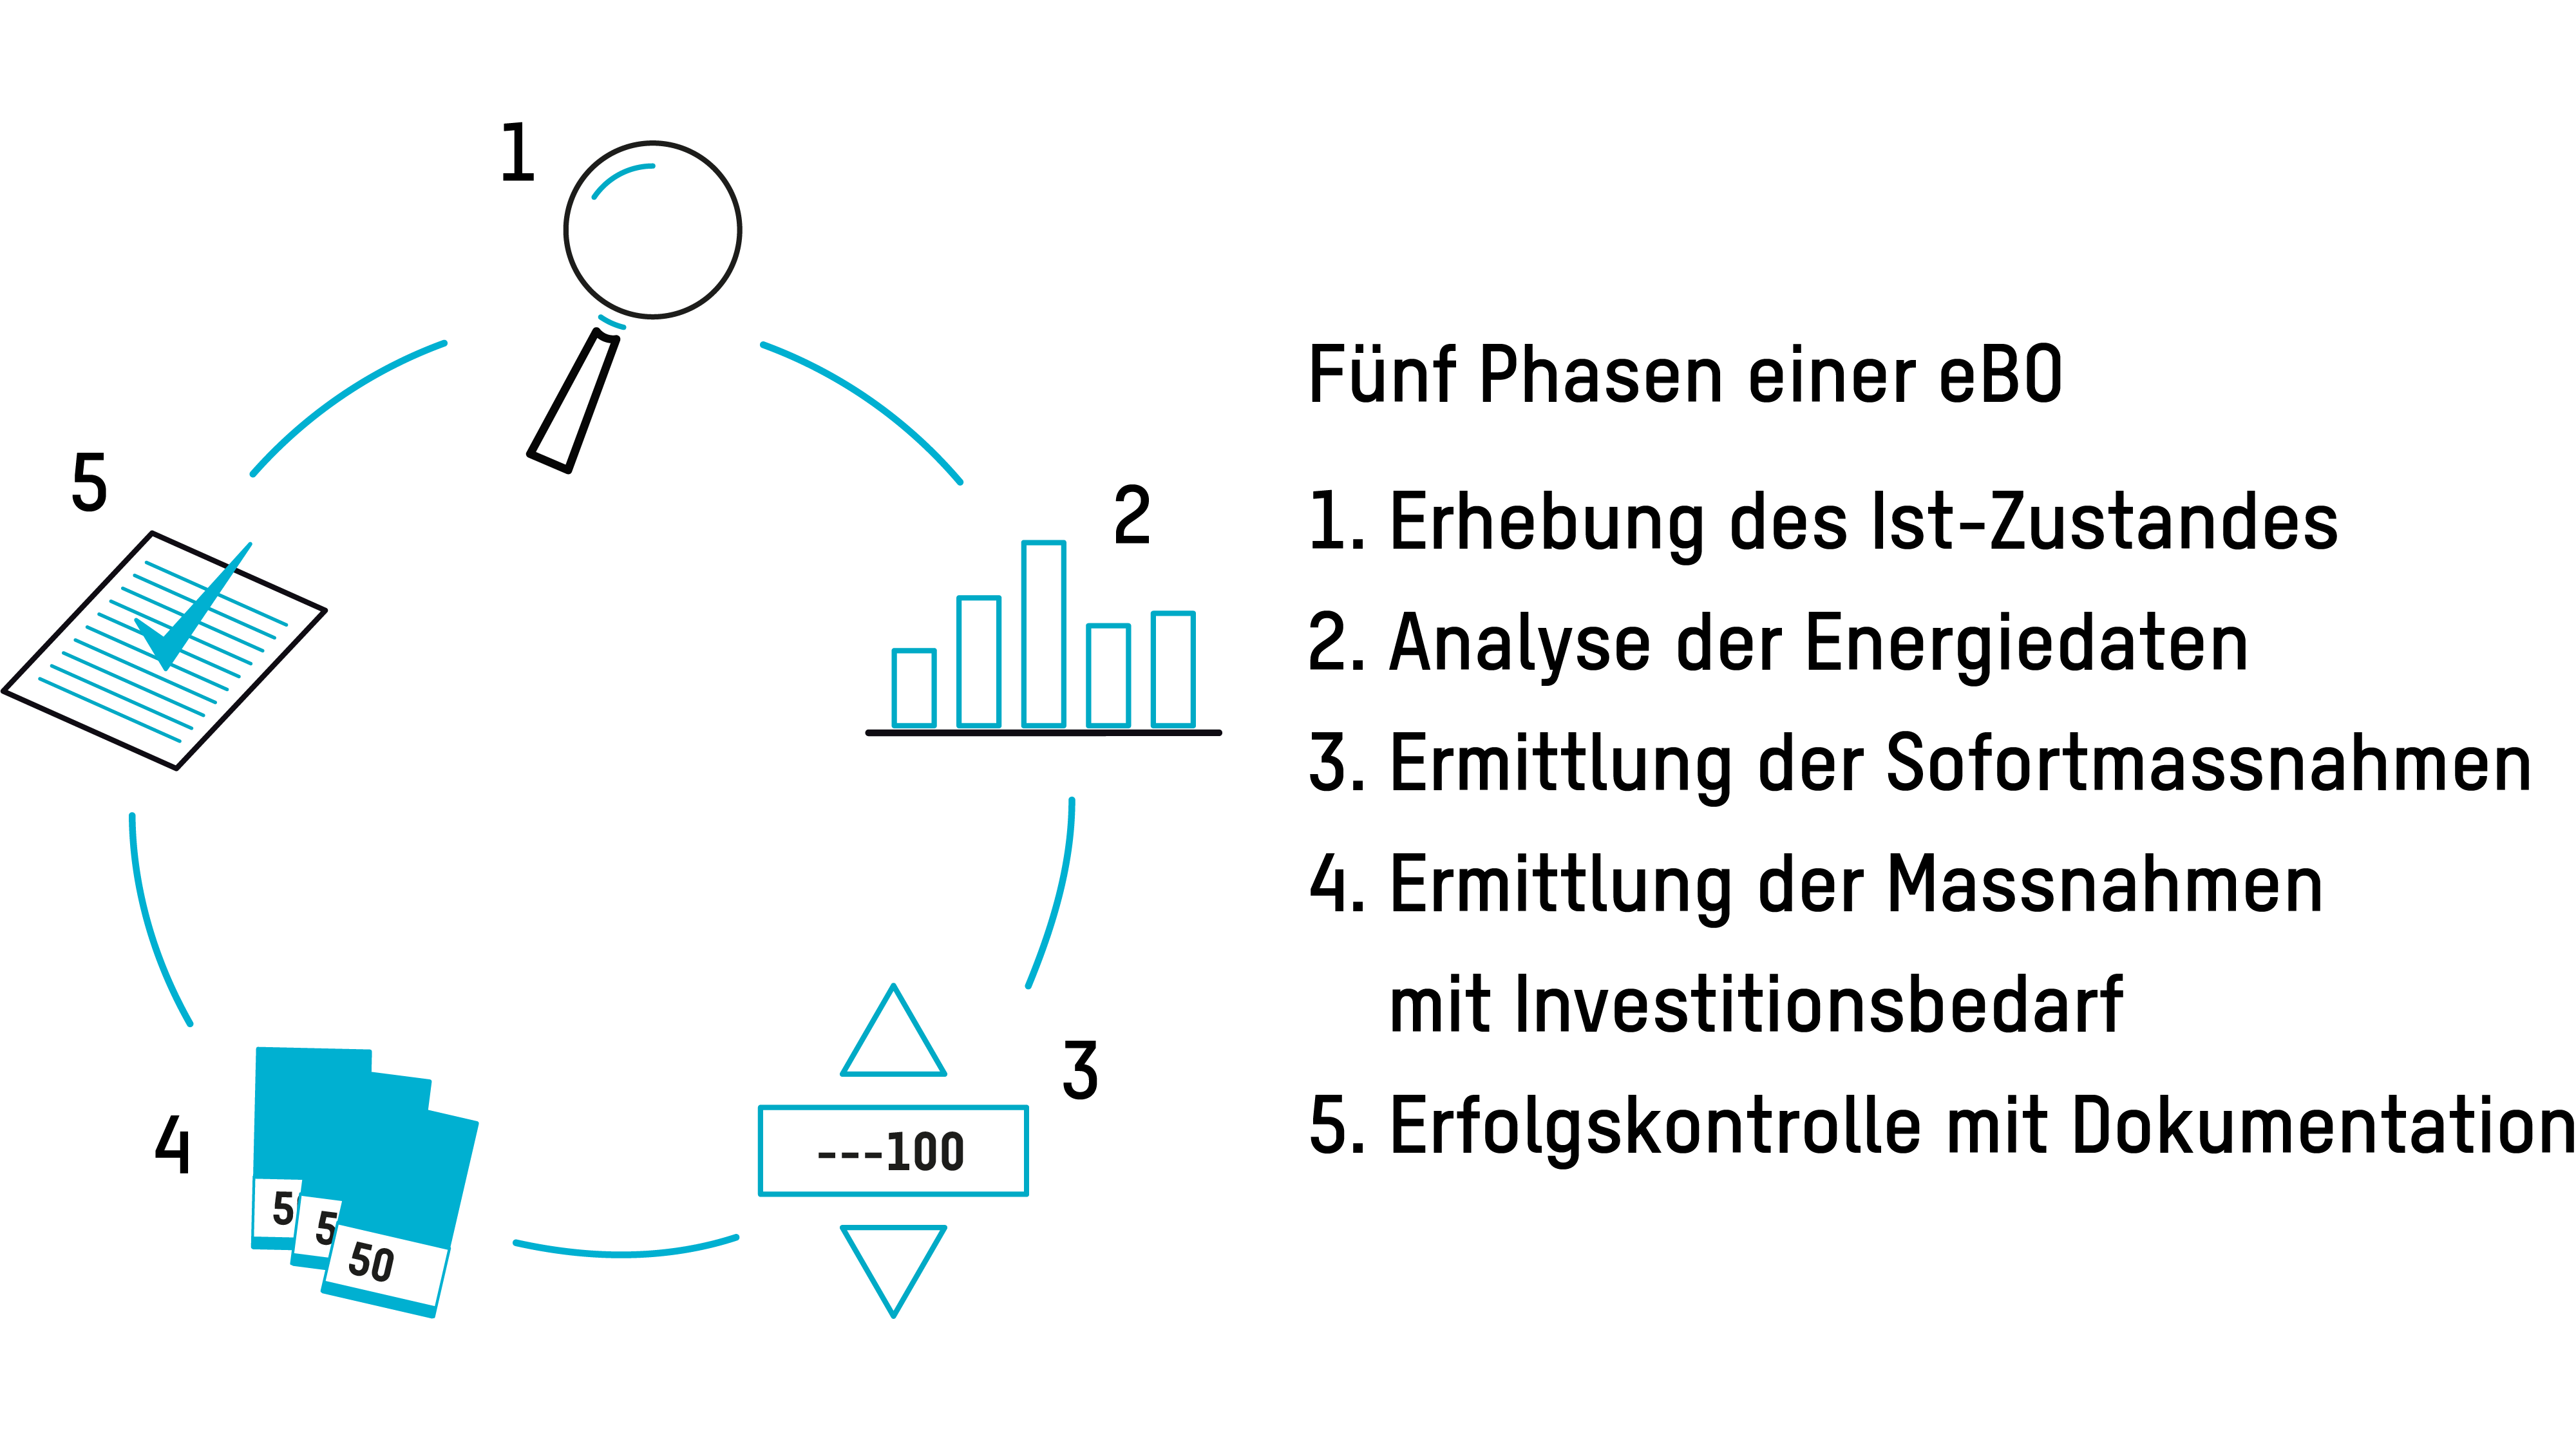 Fünf Phasen einer eBO